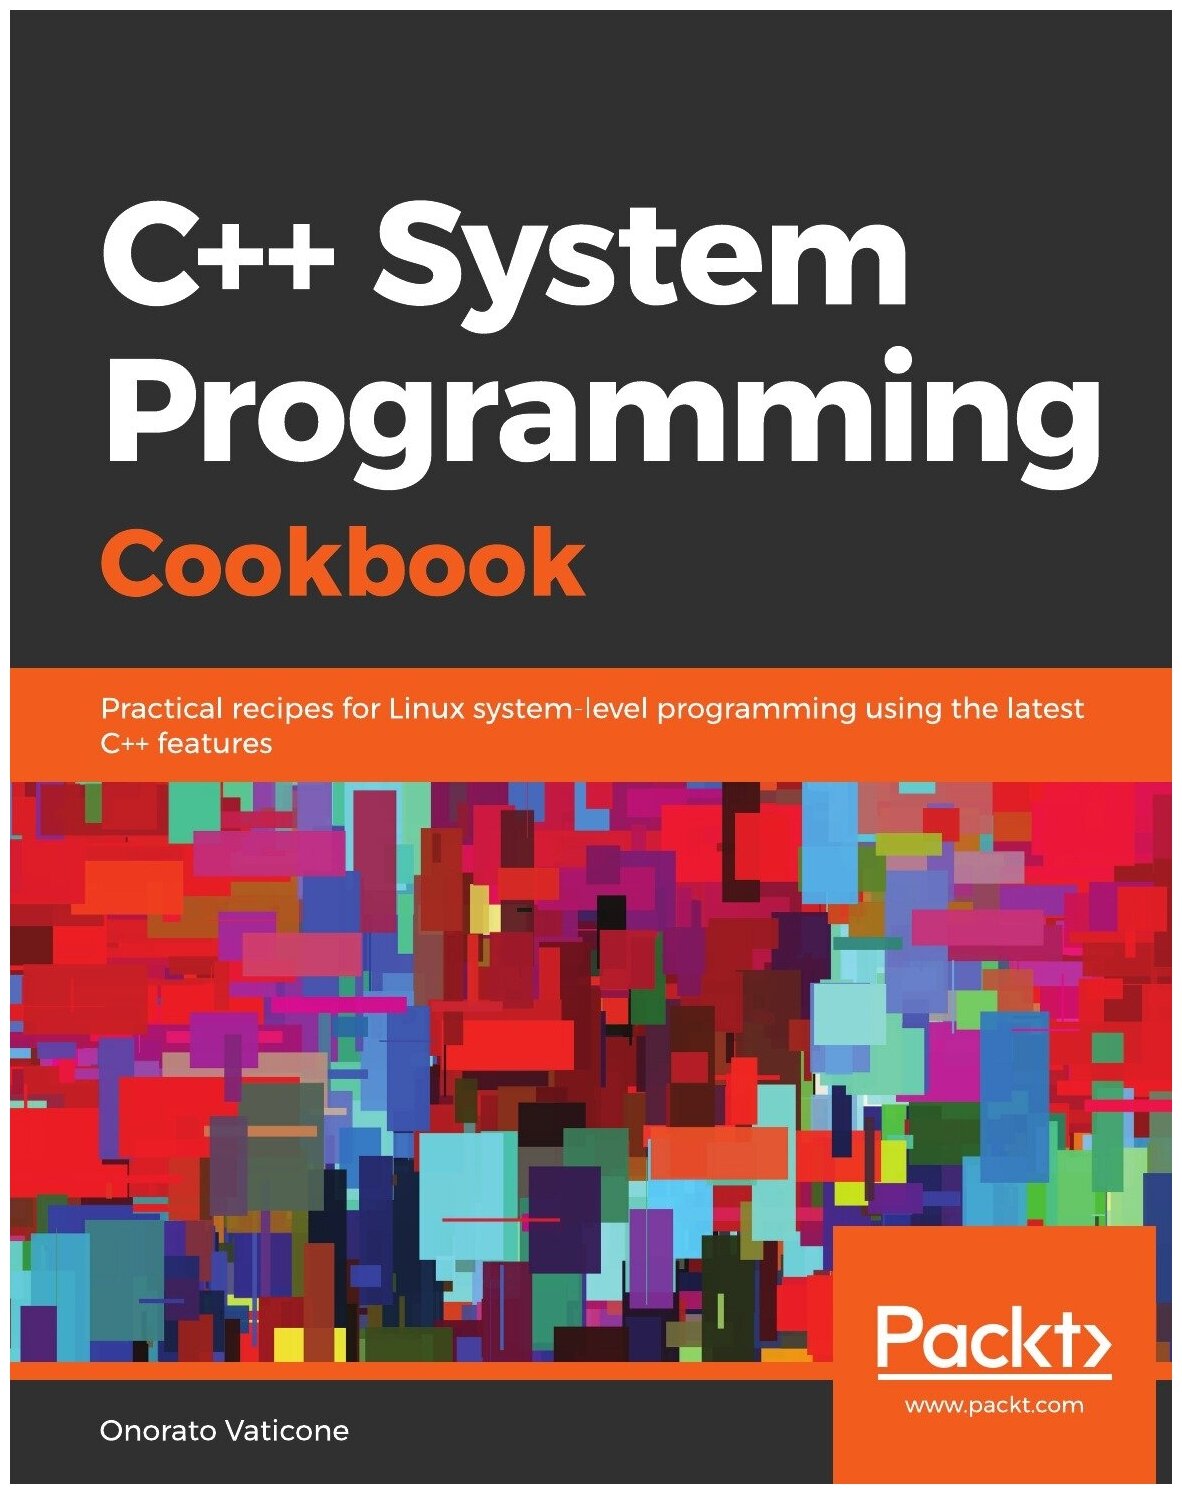 C++ System Programming Cookbook